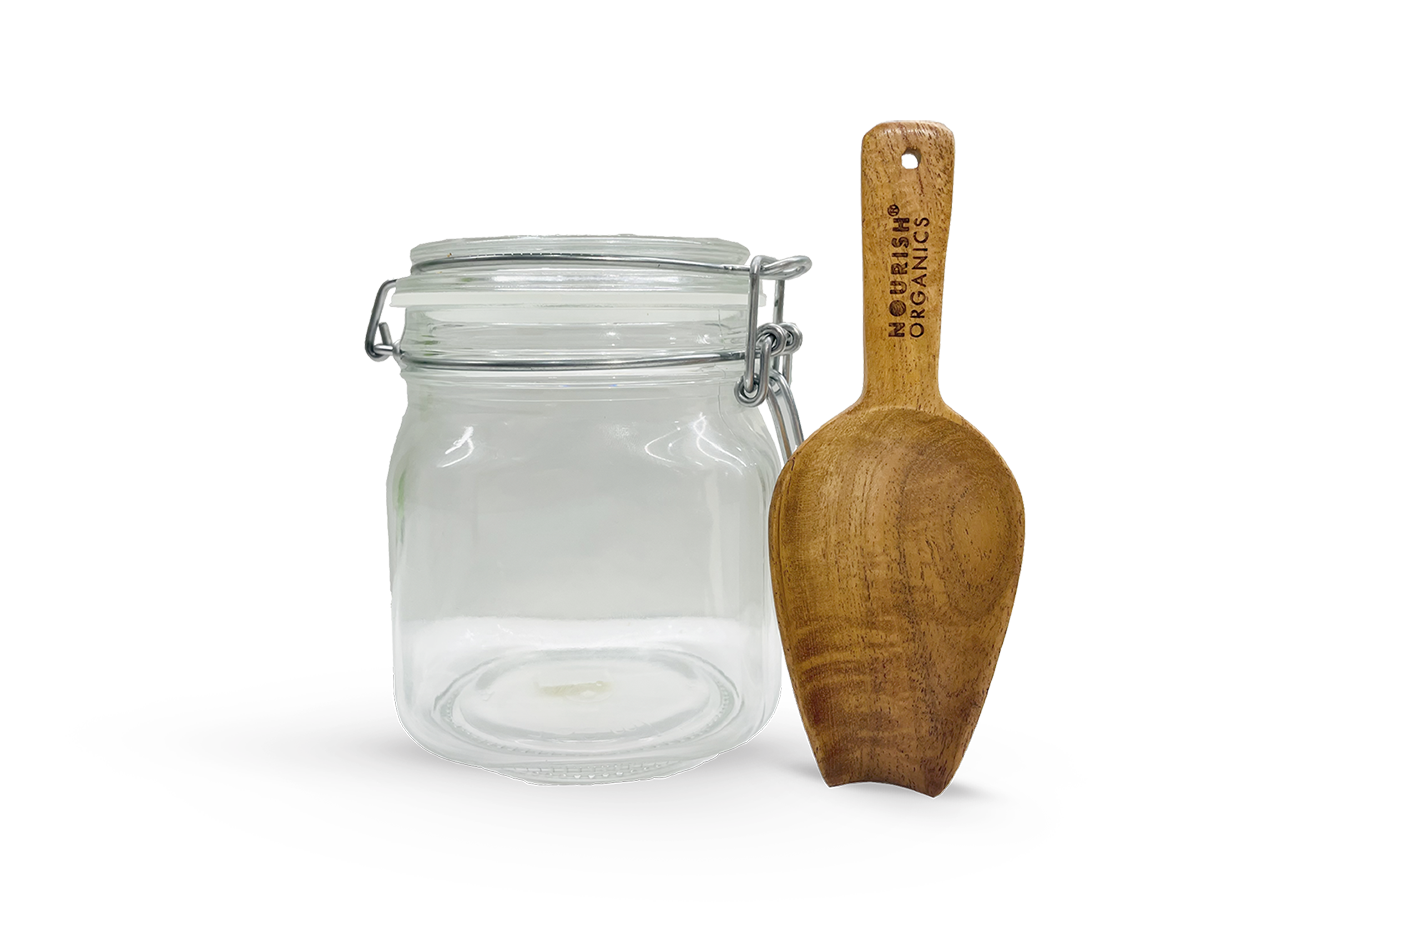 Gifting Pack - Breakfast Kit + FREE Artisanal Mason Glass Jar & Wooden Scoop!